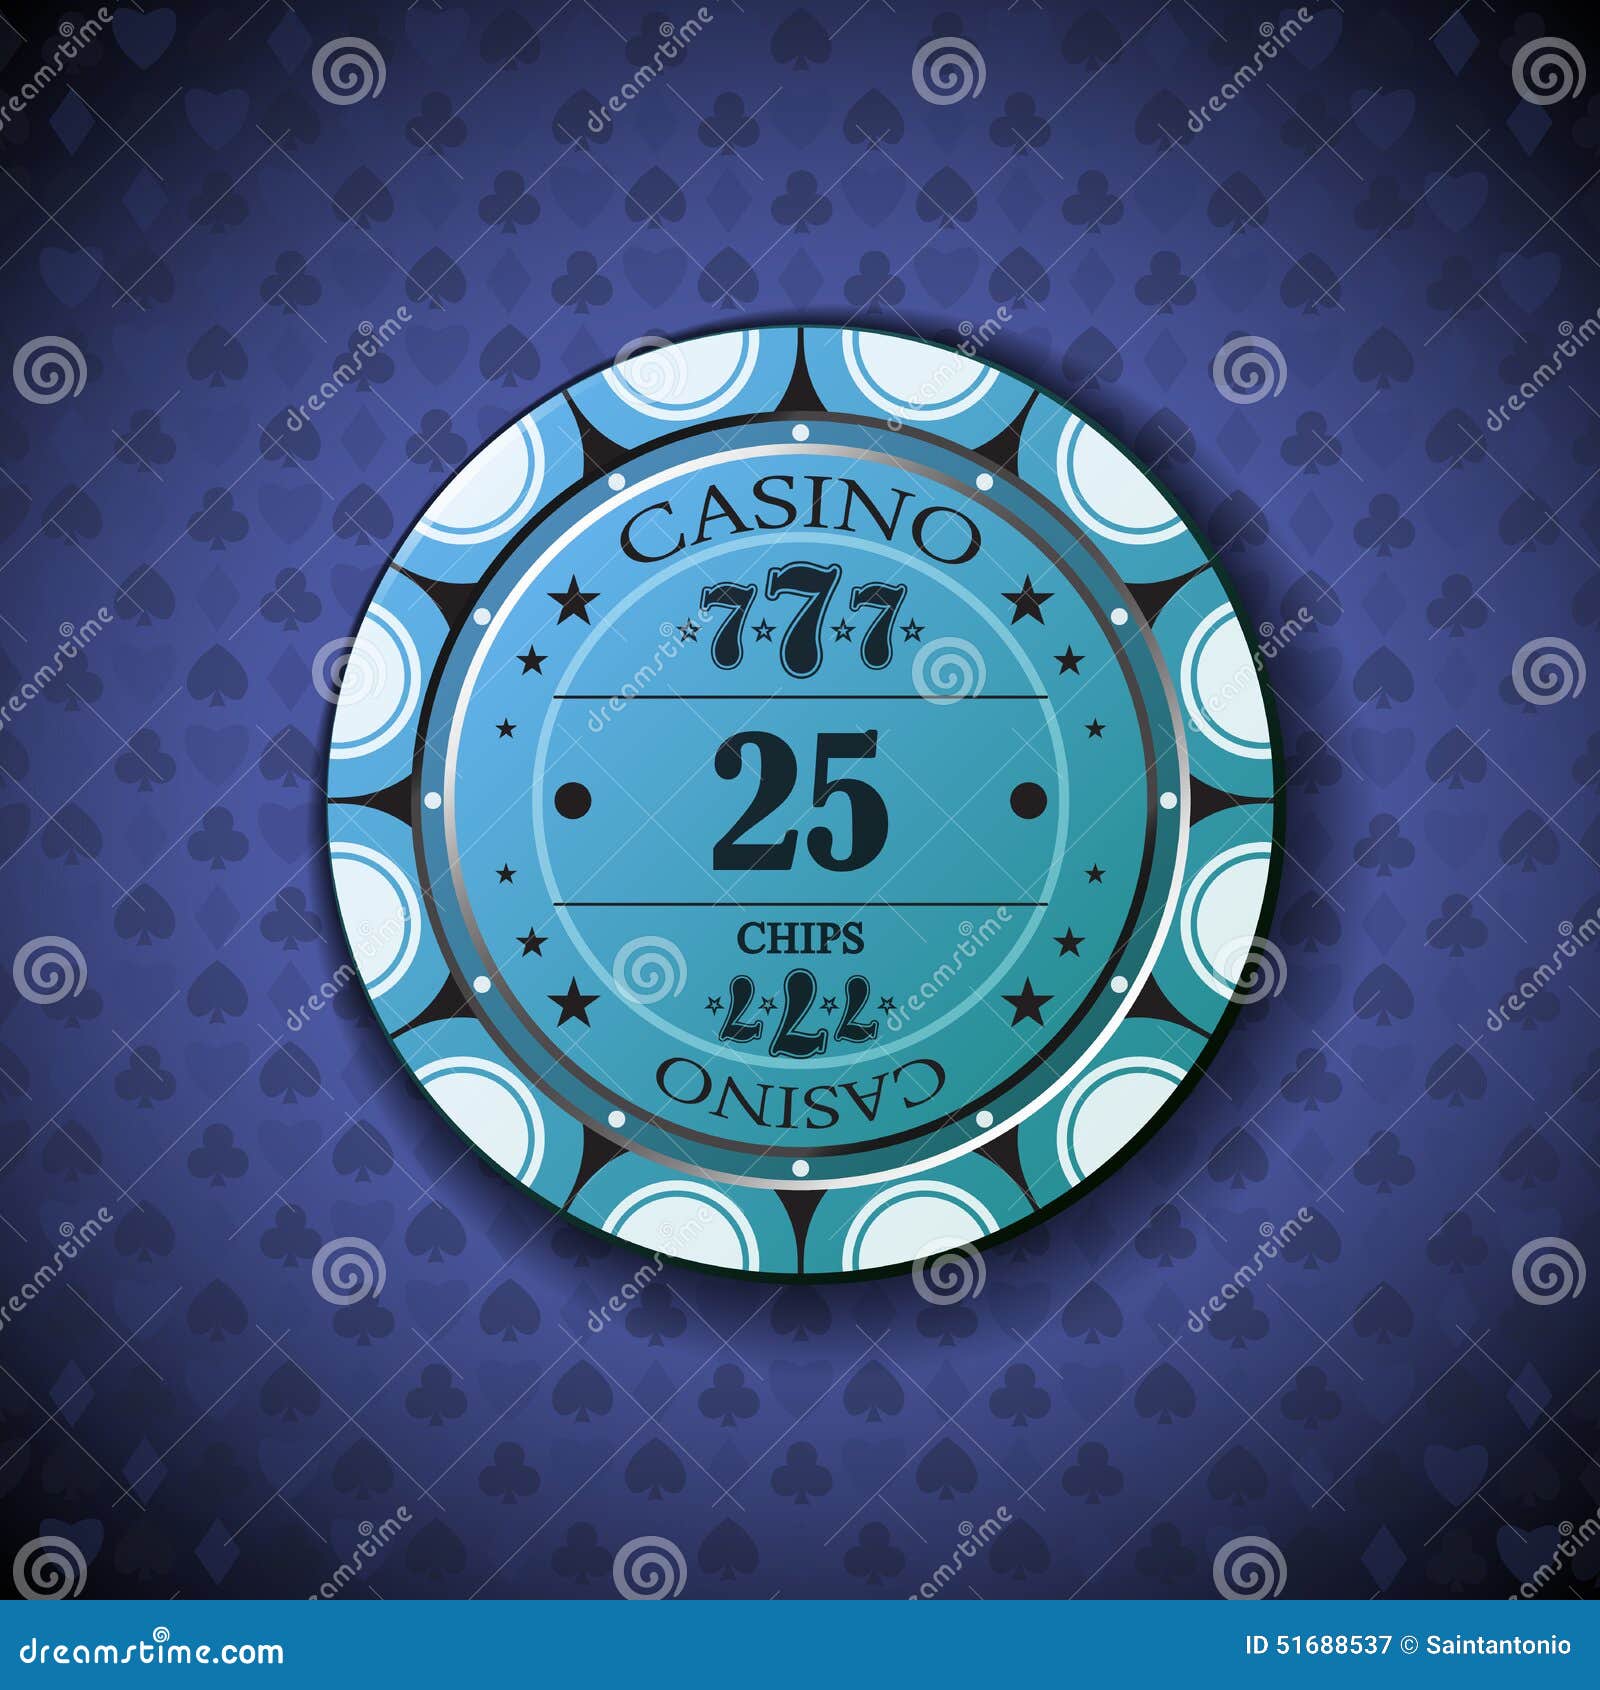 poker chip nominal twenty five, on card  background